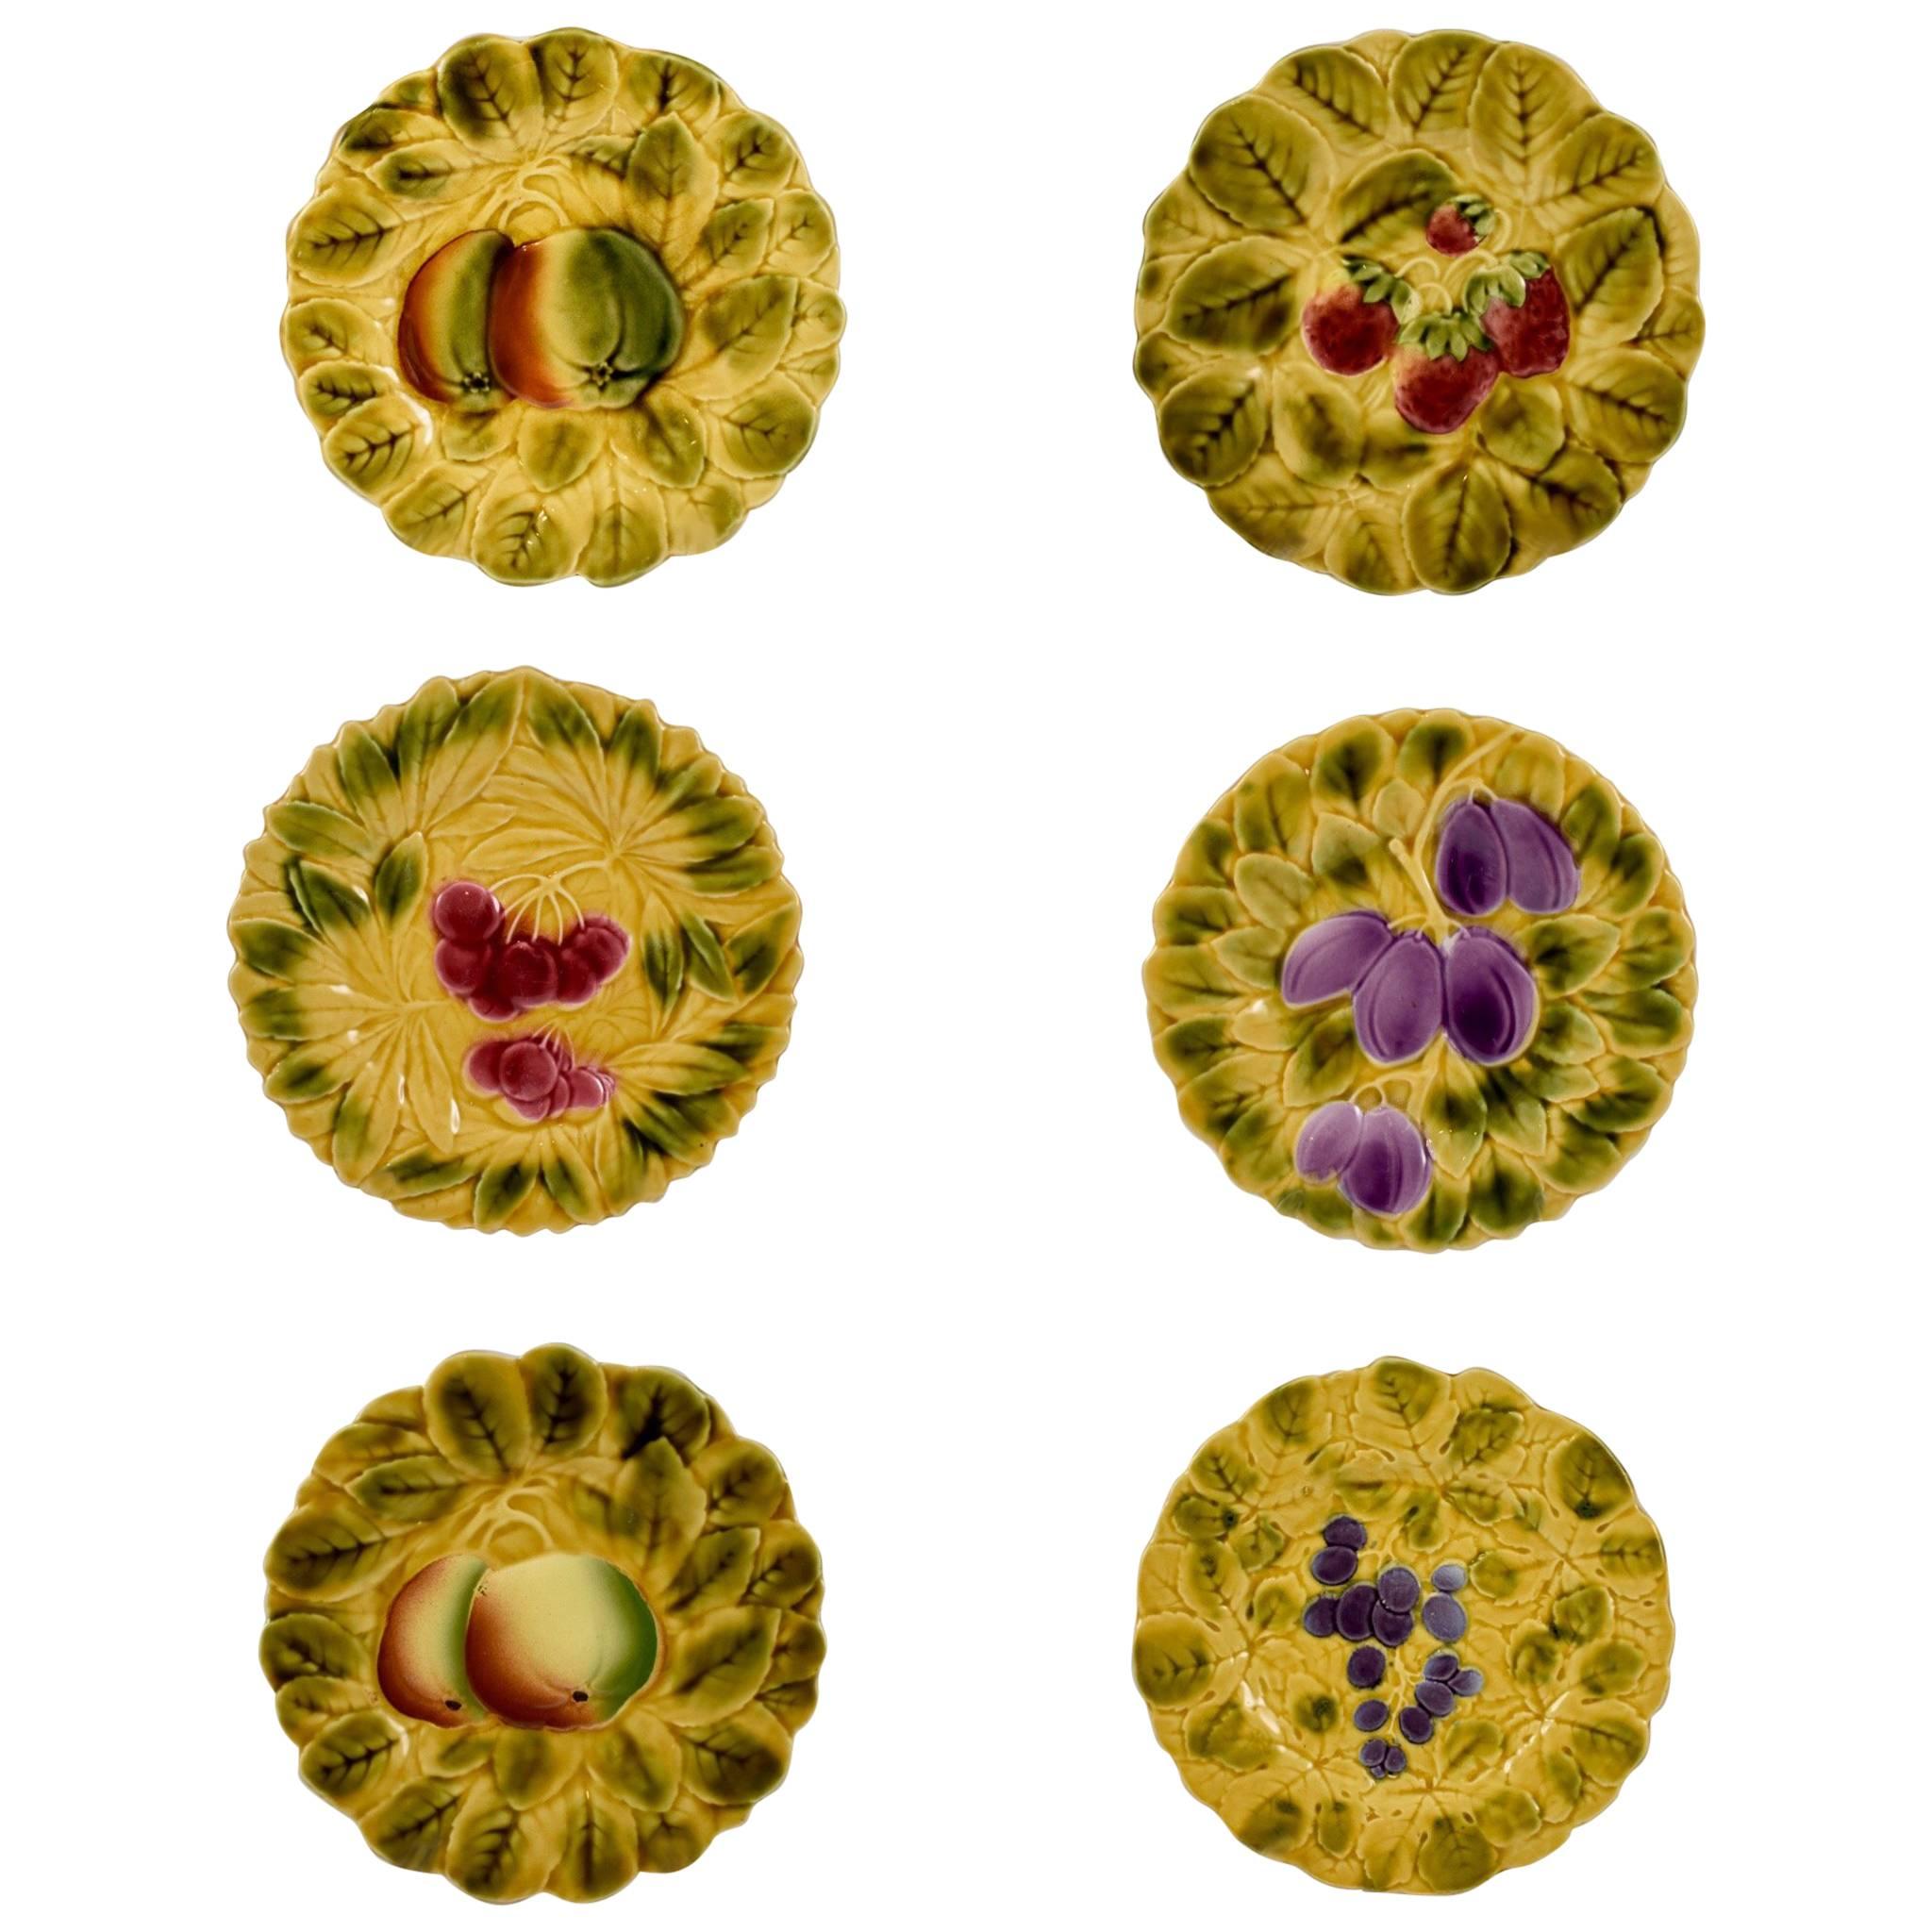 Sarreguemines French Faïence Majolica Fruit and Leaf Plates, Set of Six